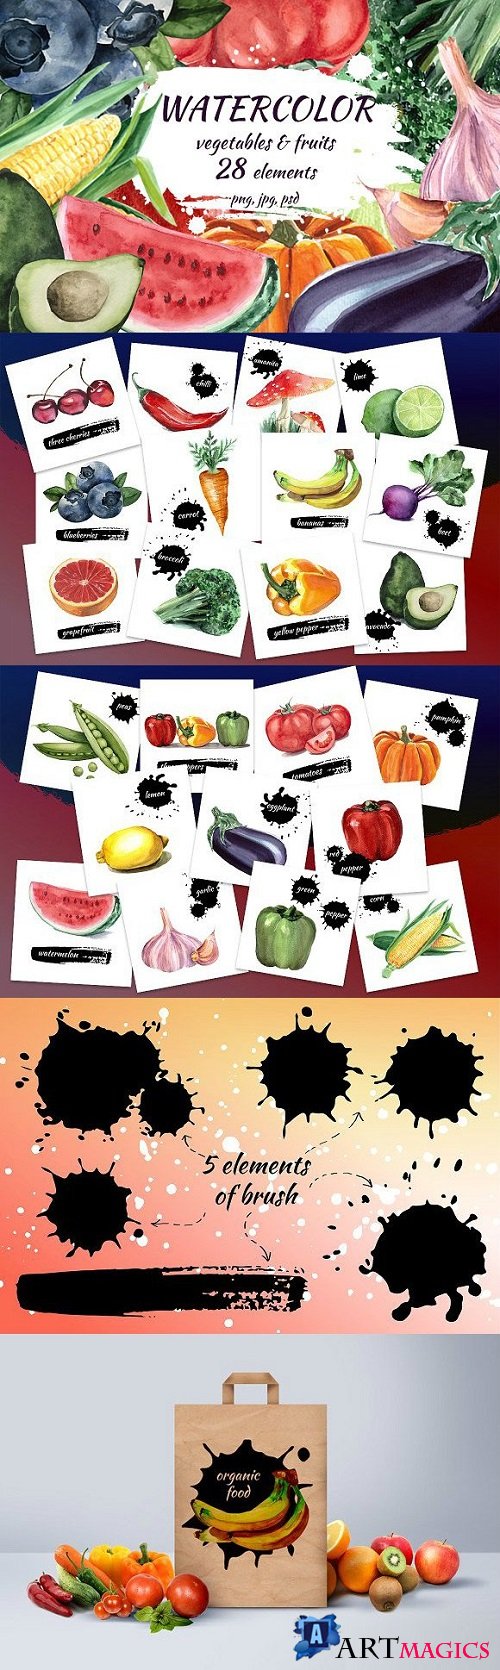 Watercolor vegetables & fruits 1934987